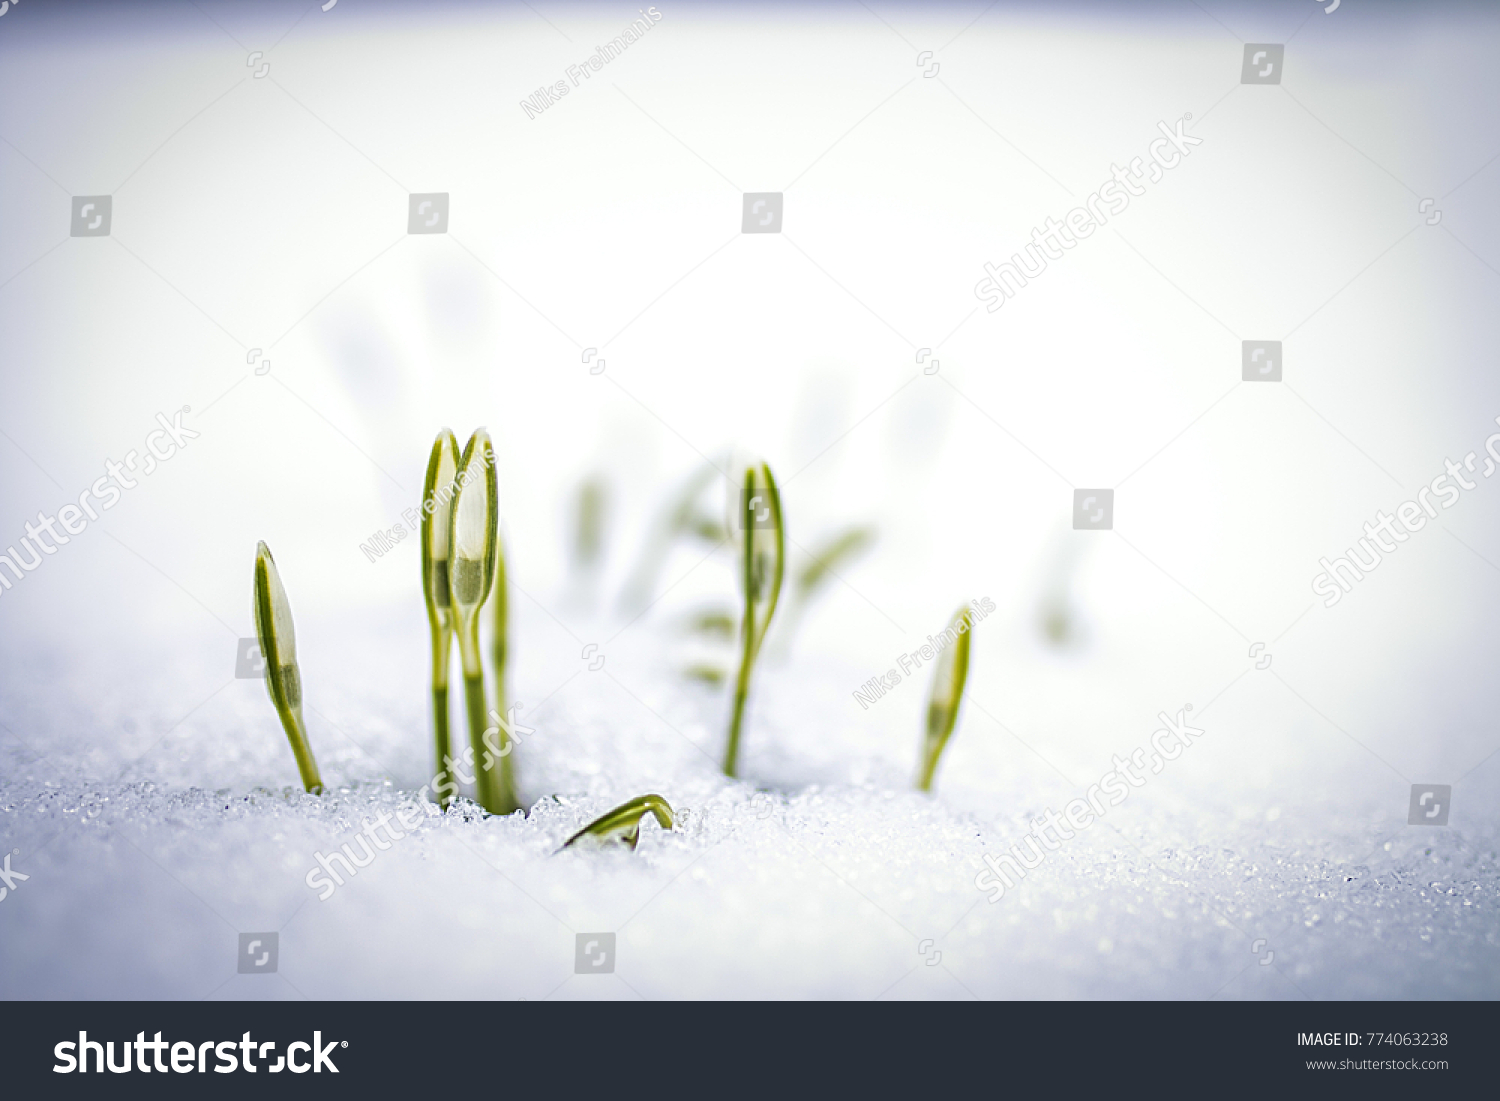 Snowdrops inearly spring, Latvia #774063238